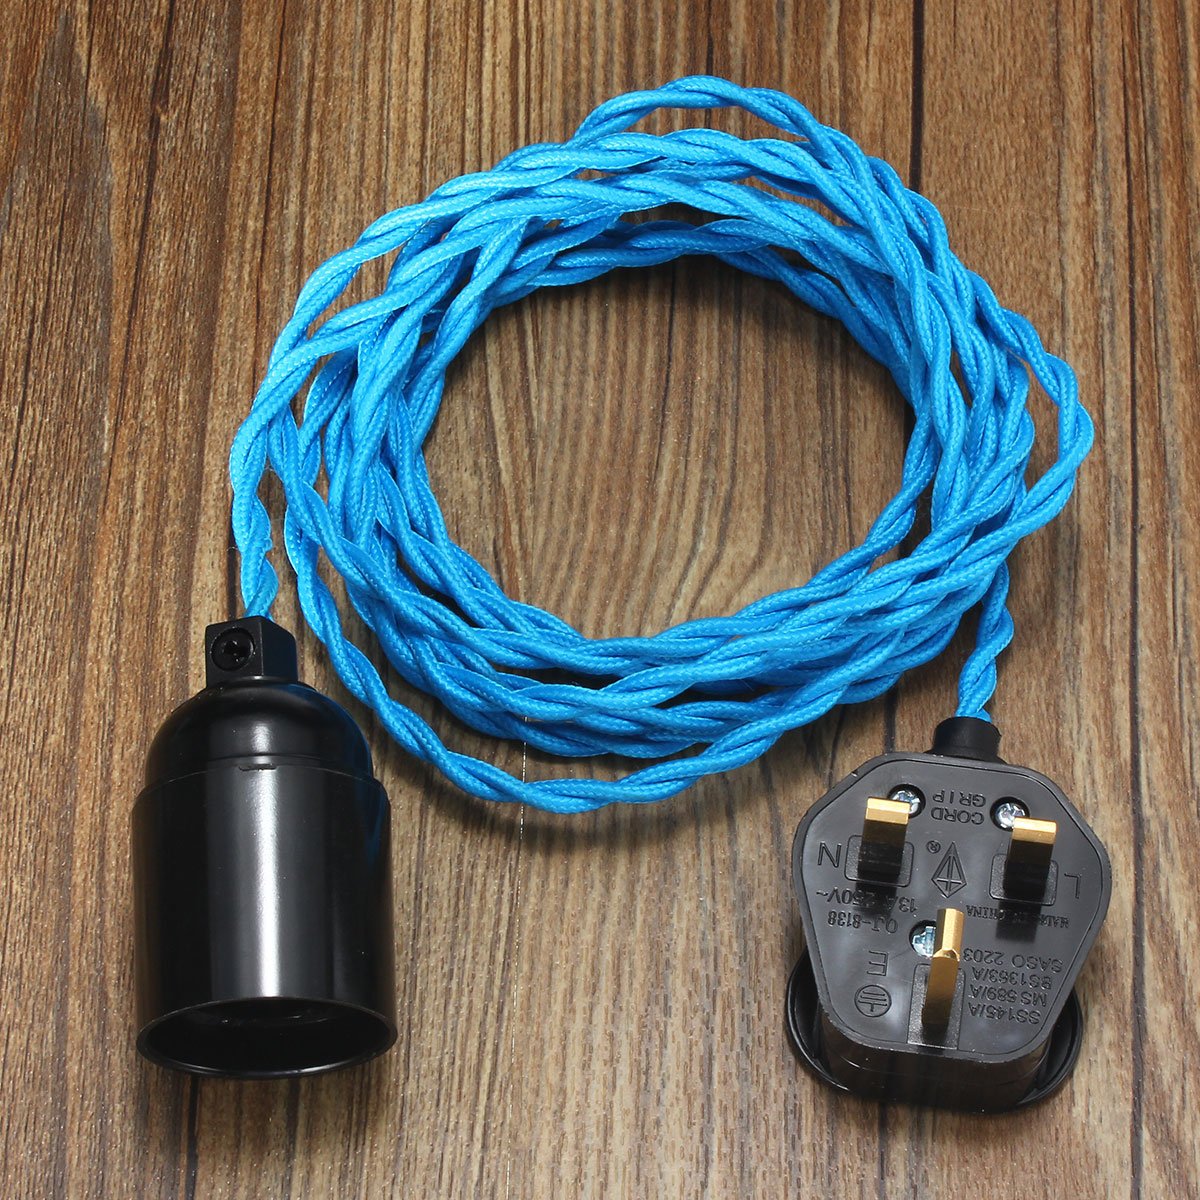 3M-E27-Vintage-Twisted-Fabric-Cable-UK-Plug-In-Pendant-Lamp-Light-Bulb-Holder-Socket-1068749-3